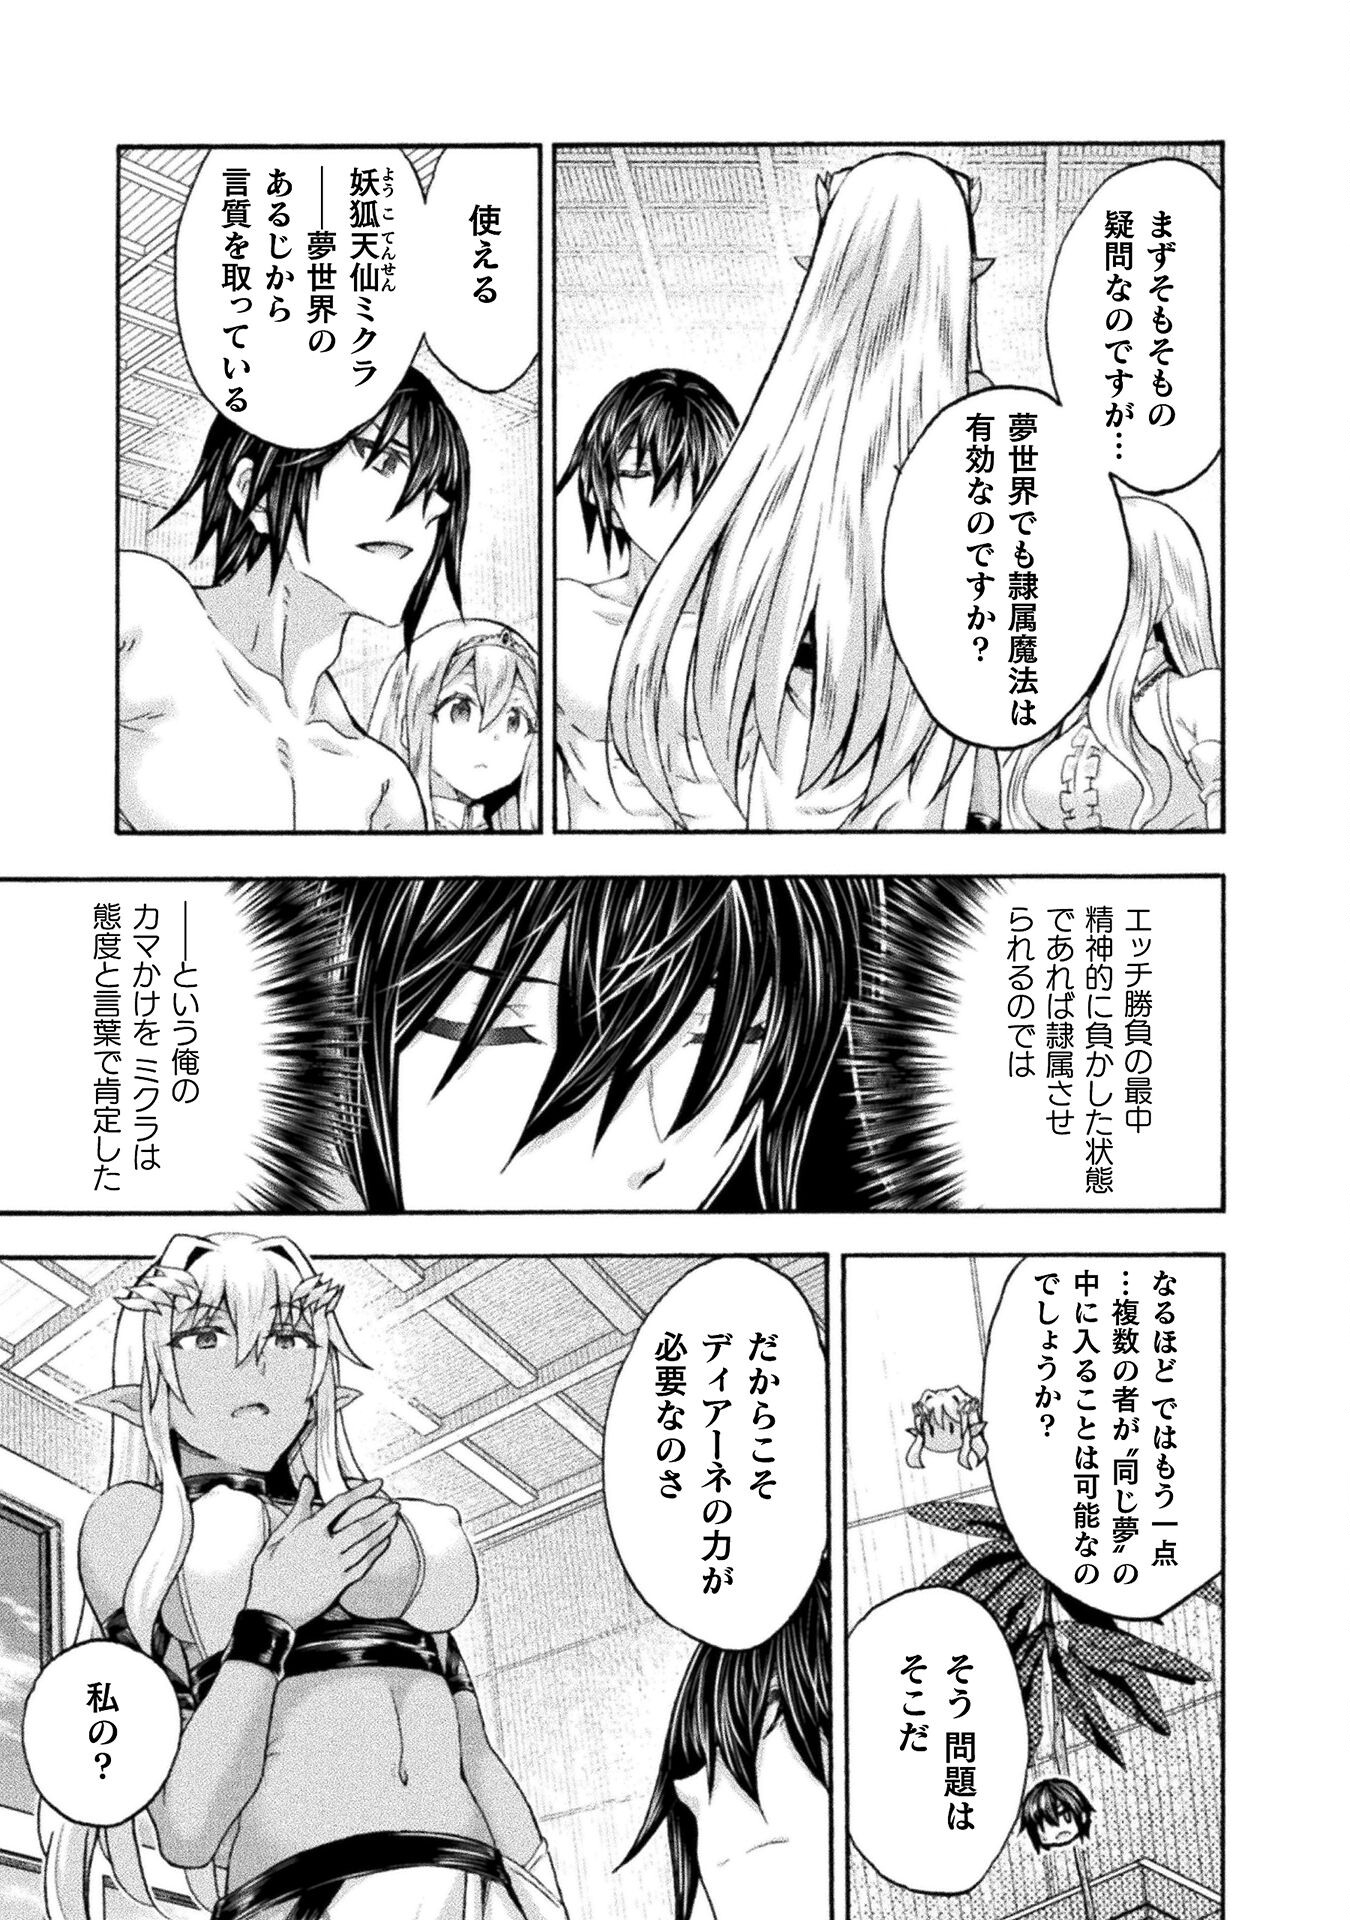 Himekishi ga Classmate! - Chapter 62 - Page 3